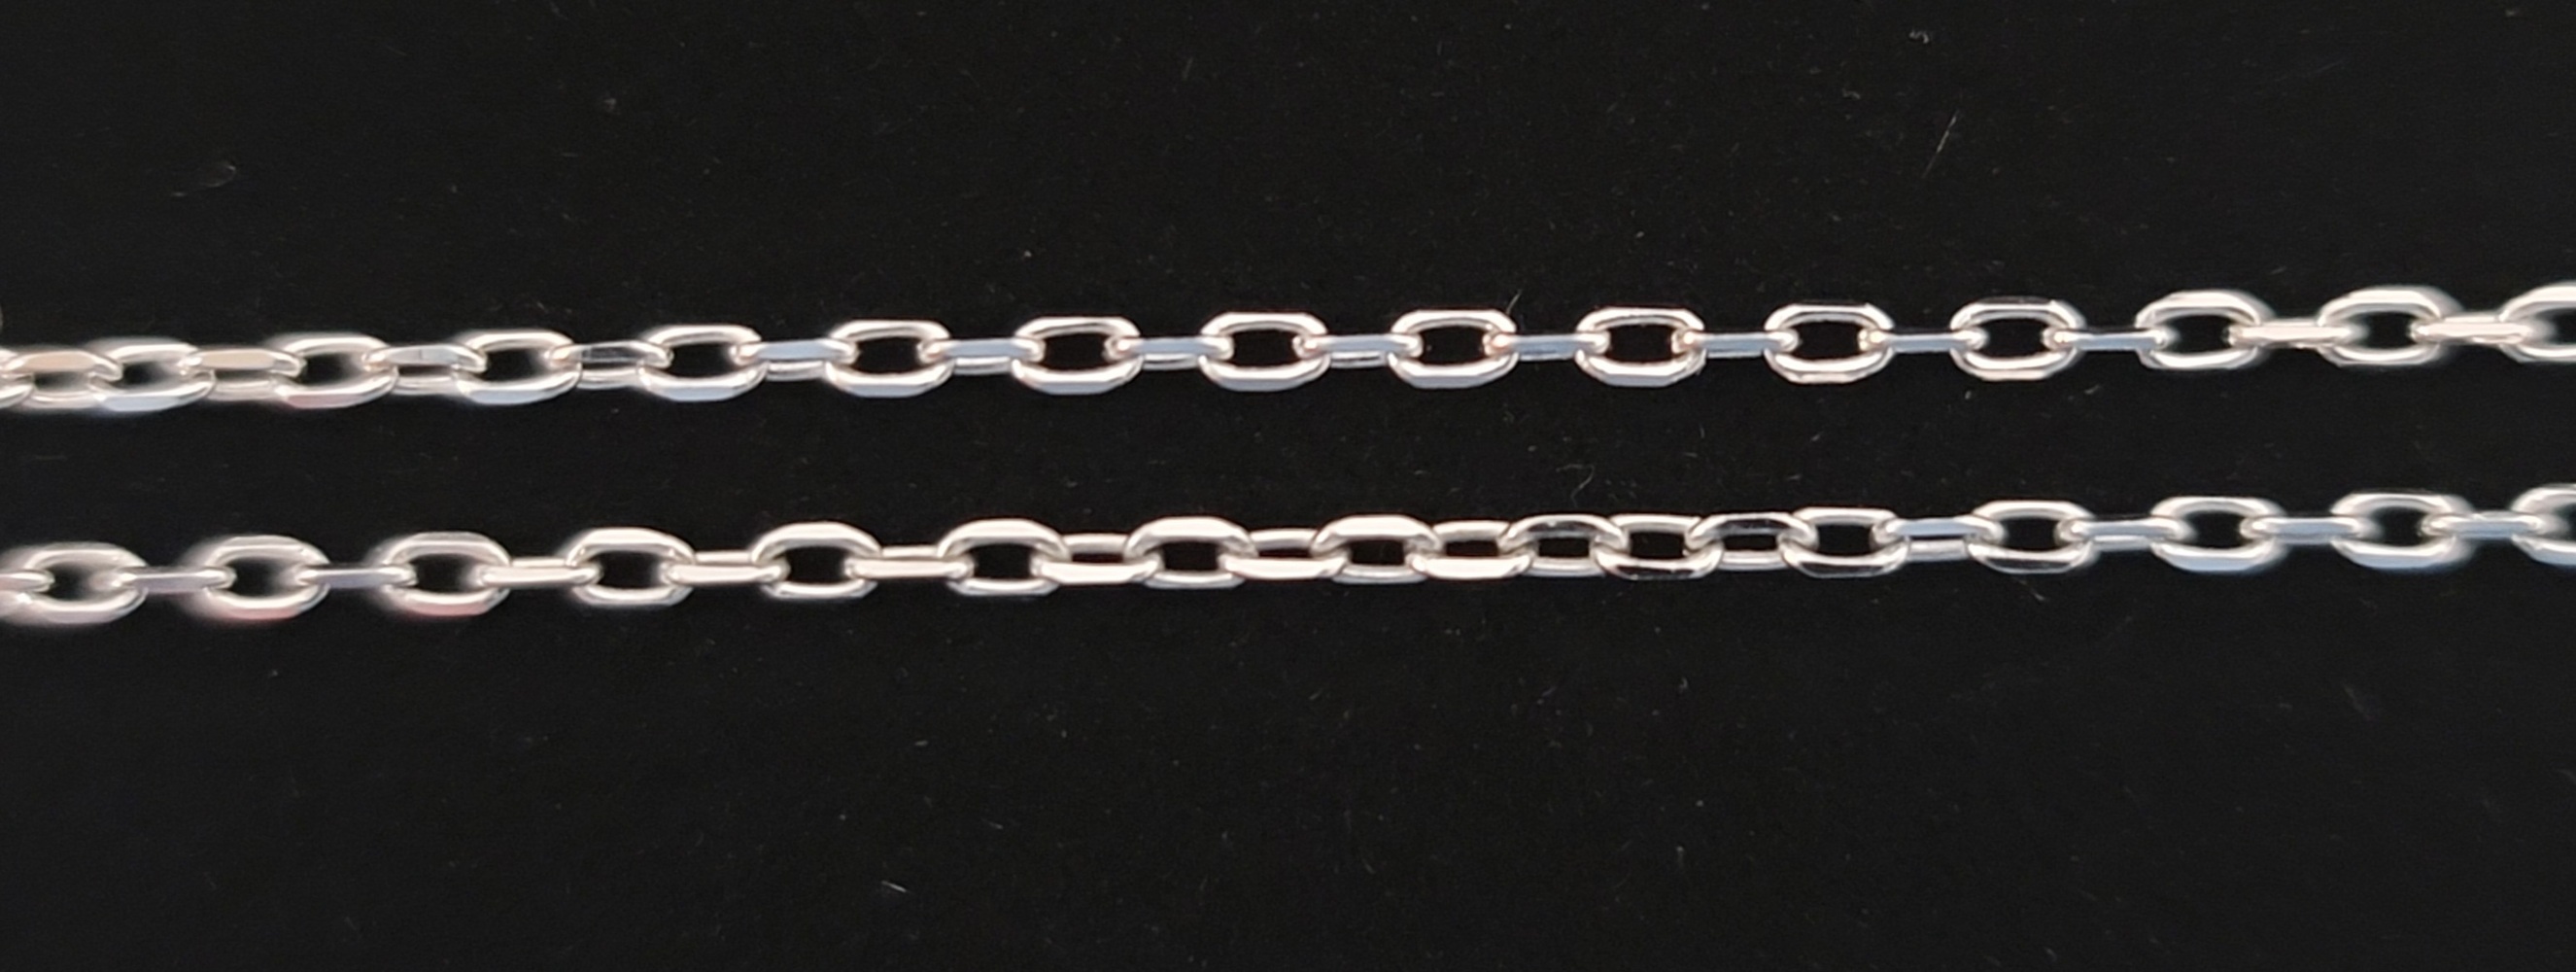 Swarovski Locket Pendant Necklace Chain